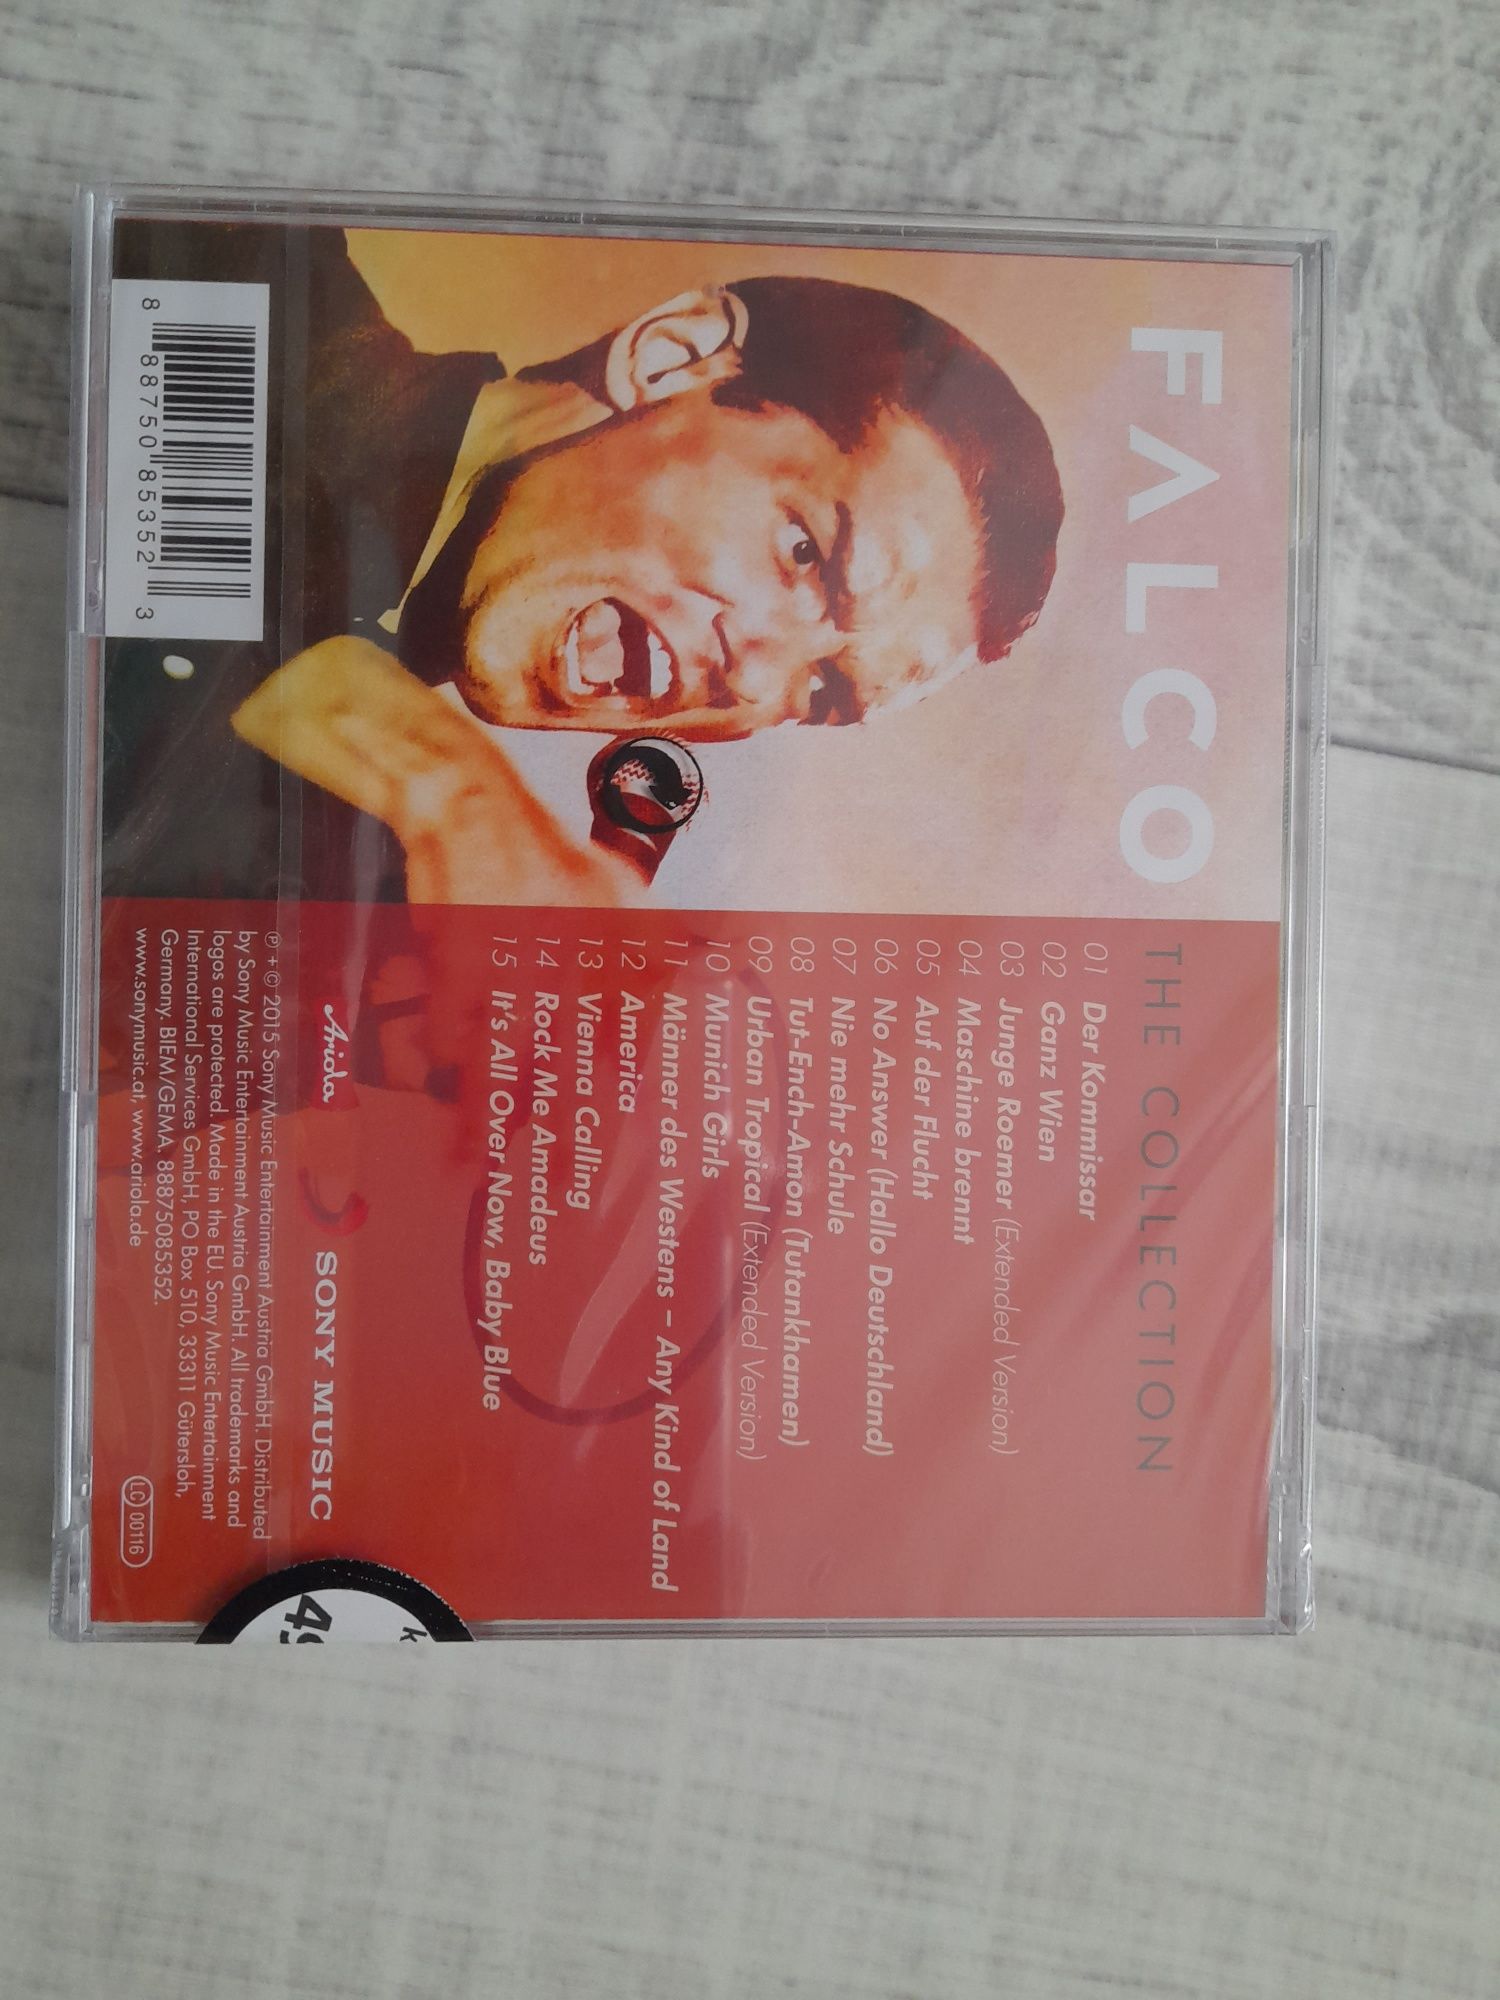 Falco-The Collection.Plyta cd. W folii.